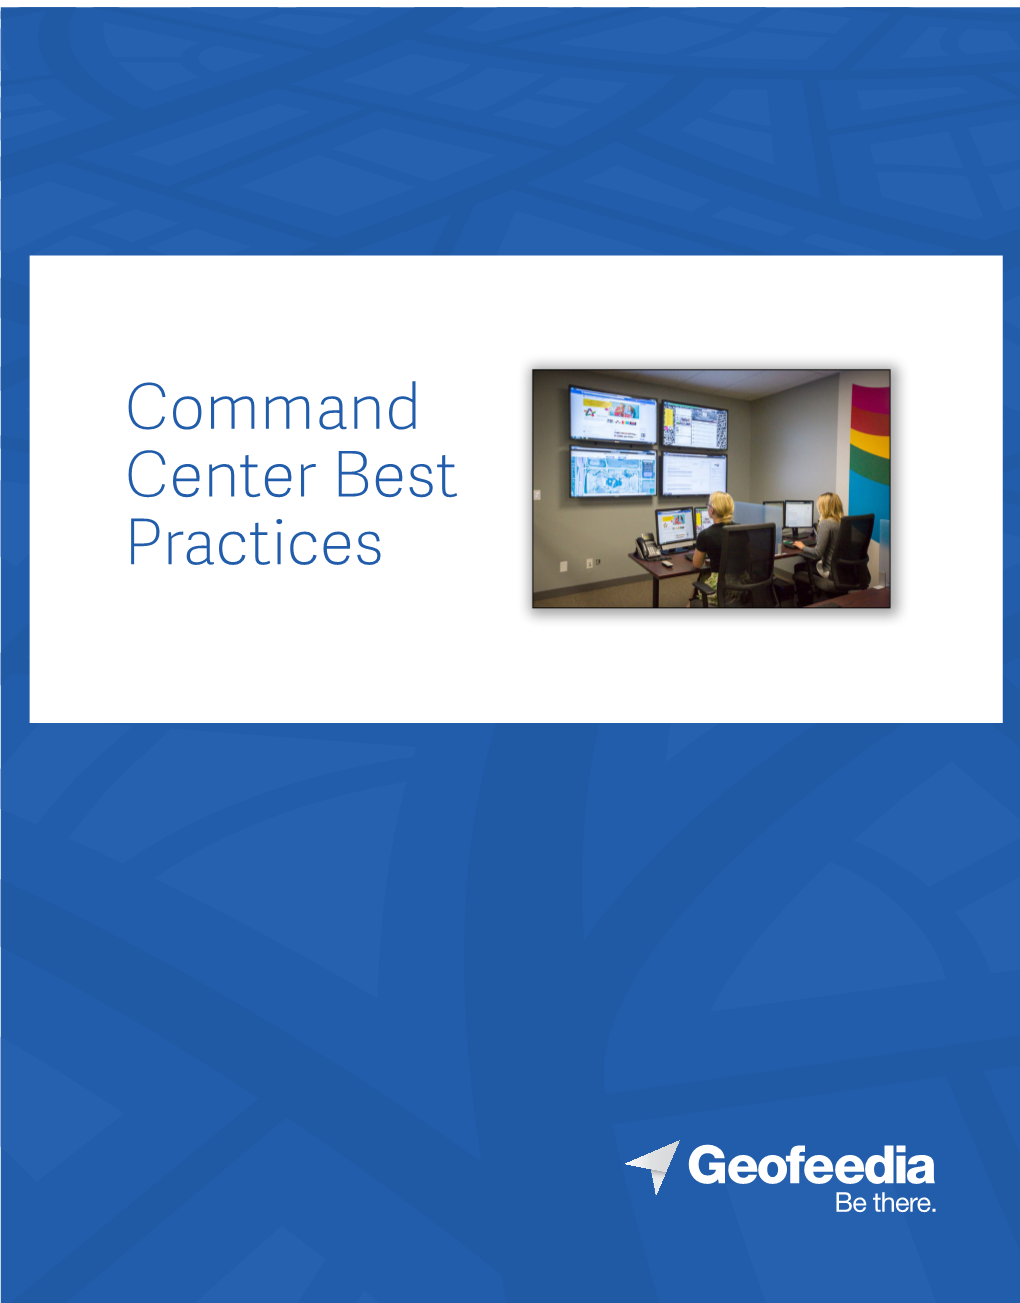 Command Center Best Practices 2 | COMMAND CENTER BEST PRACTICES